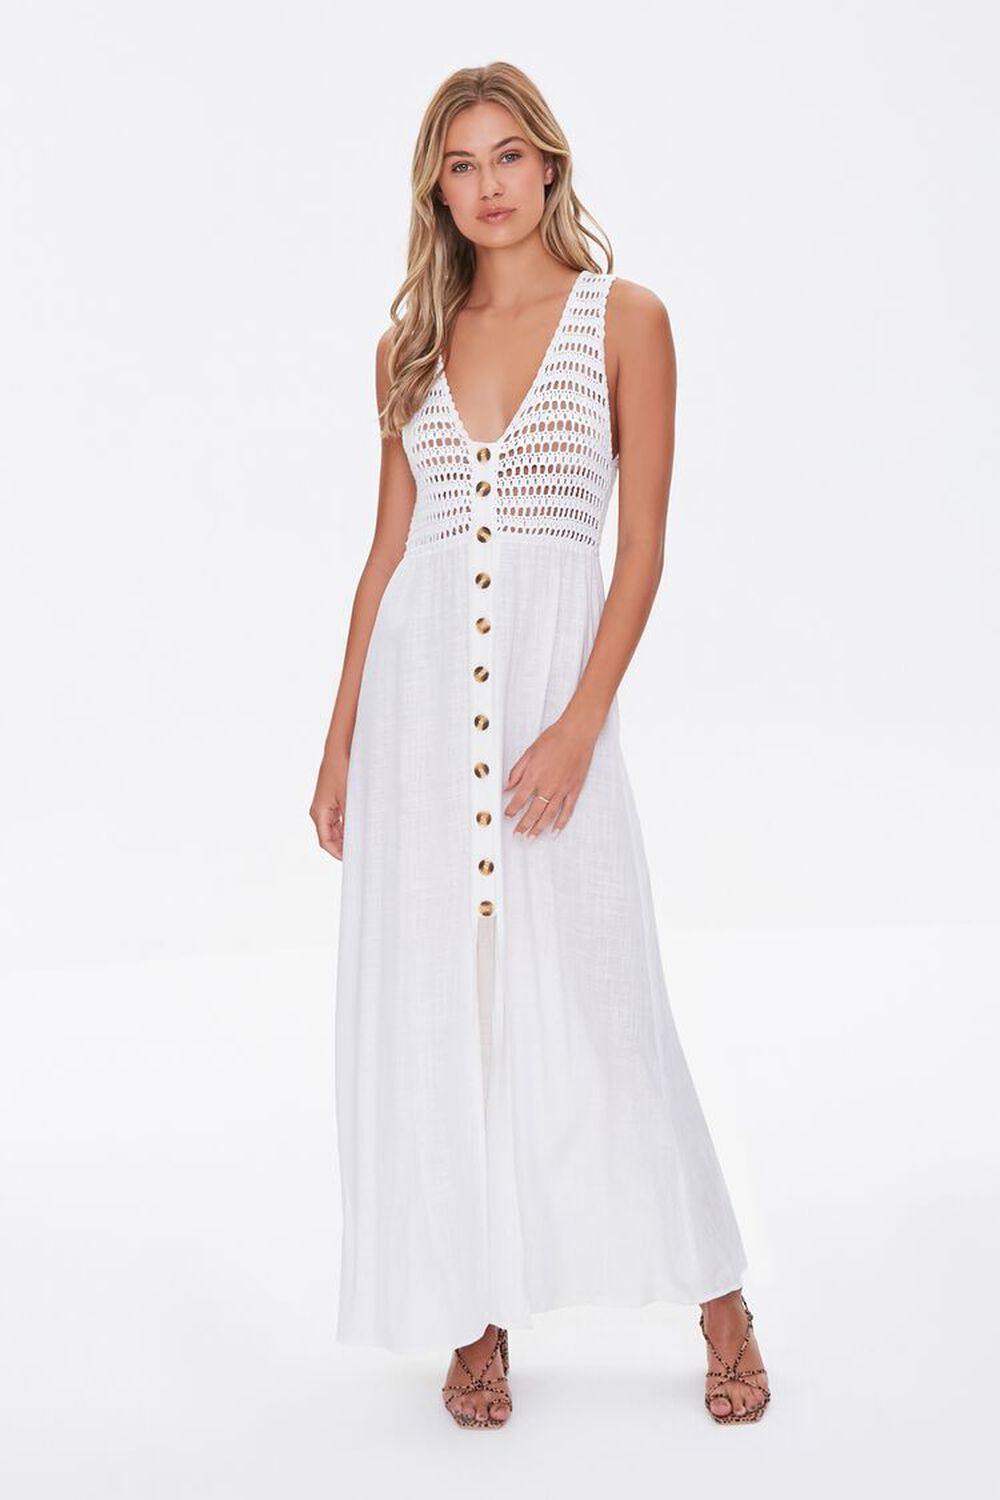 WHITE Gauze & Open-Knit Combo Dress, image 1